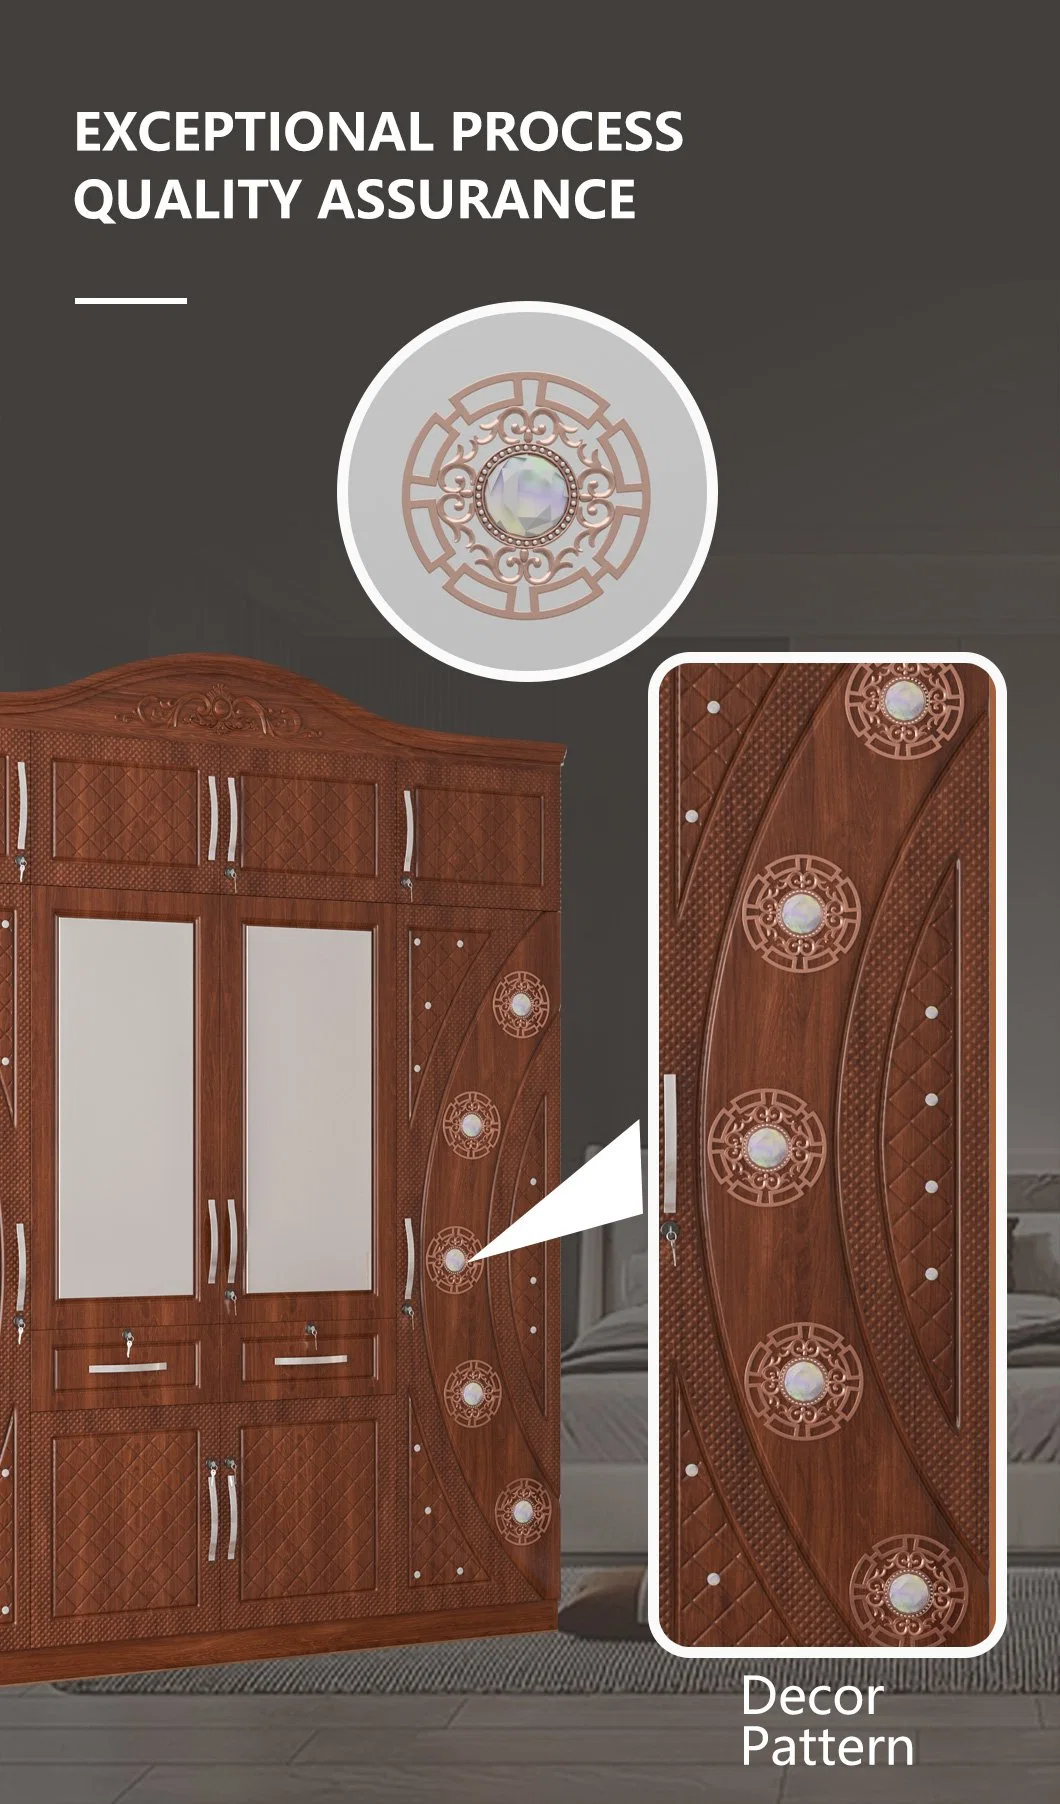 Hot Sale Classic 4 Door Wardrobe with Cupboard Cabinet Wholesale Brown Large 500 mm Depth Wardrobe Bedroom Furniture Set